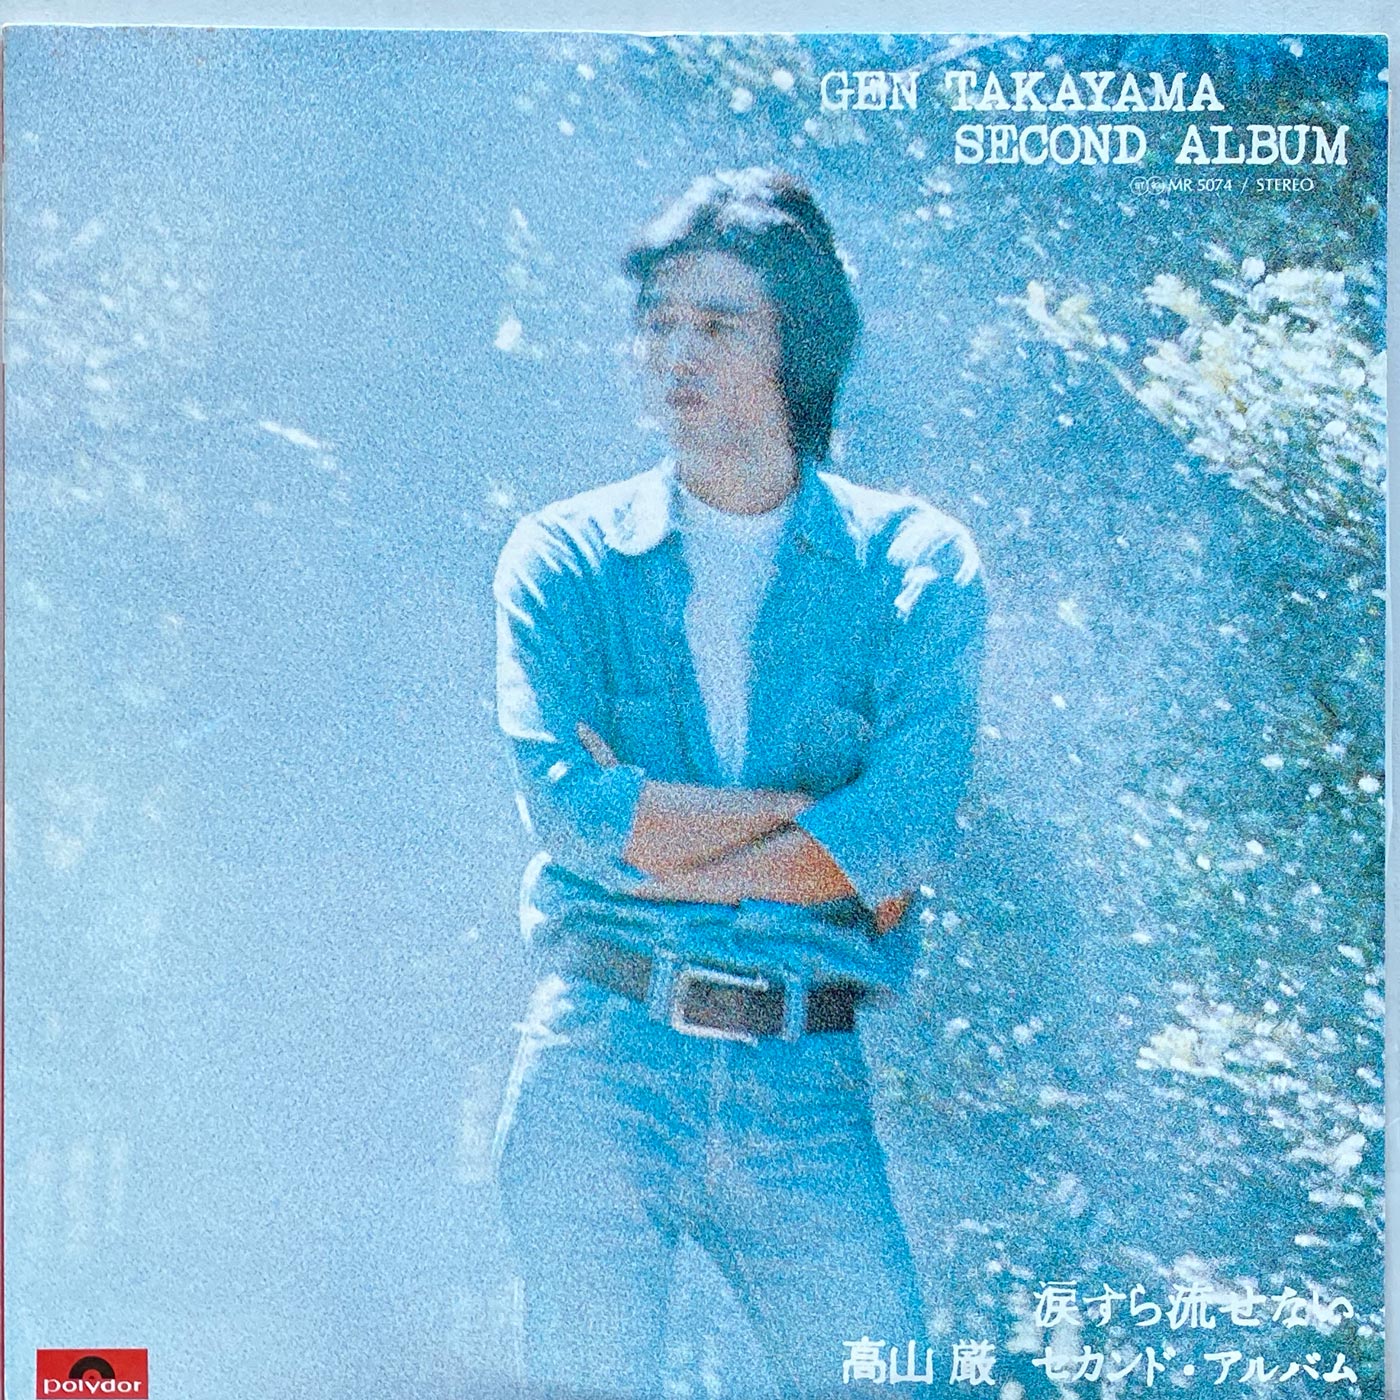 Gen Takayama - Second Album